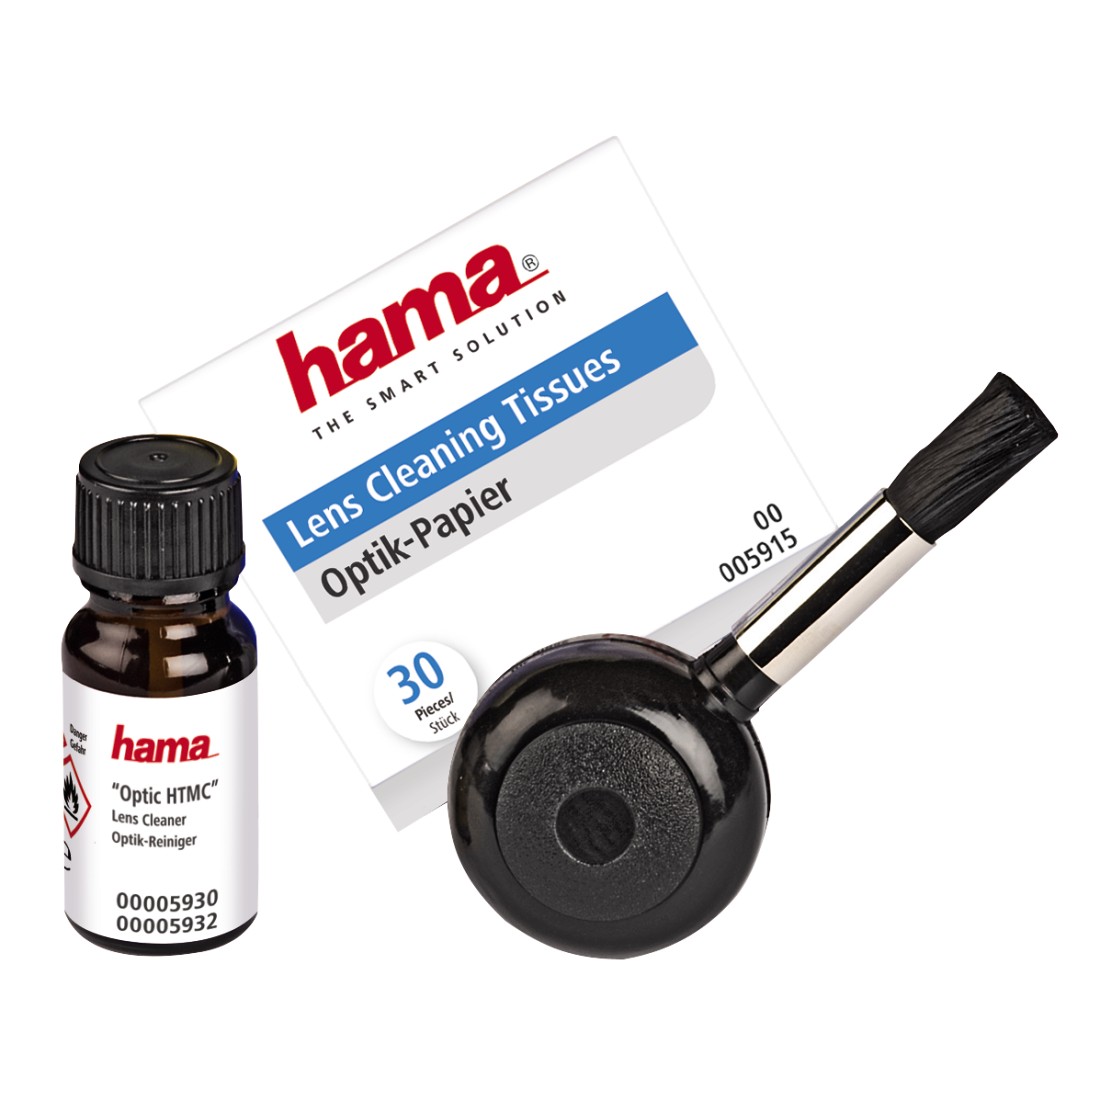 00005932 Hama "Optik HTMC" 3-Piece Cleaning Set | hama.com